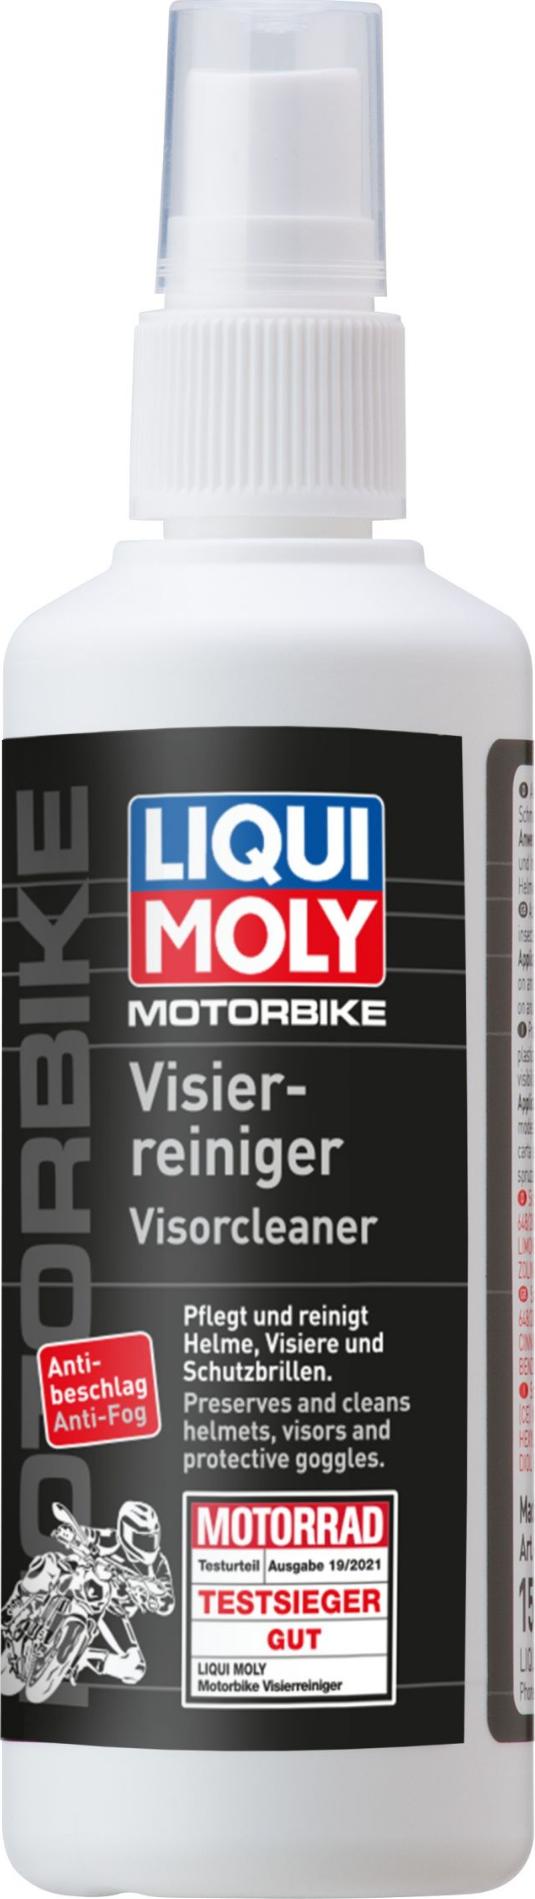 Liqui Moly 1571 - Detergente universal parts5.com